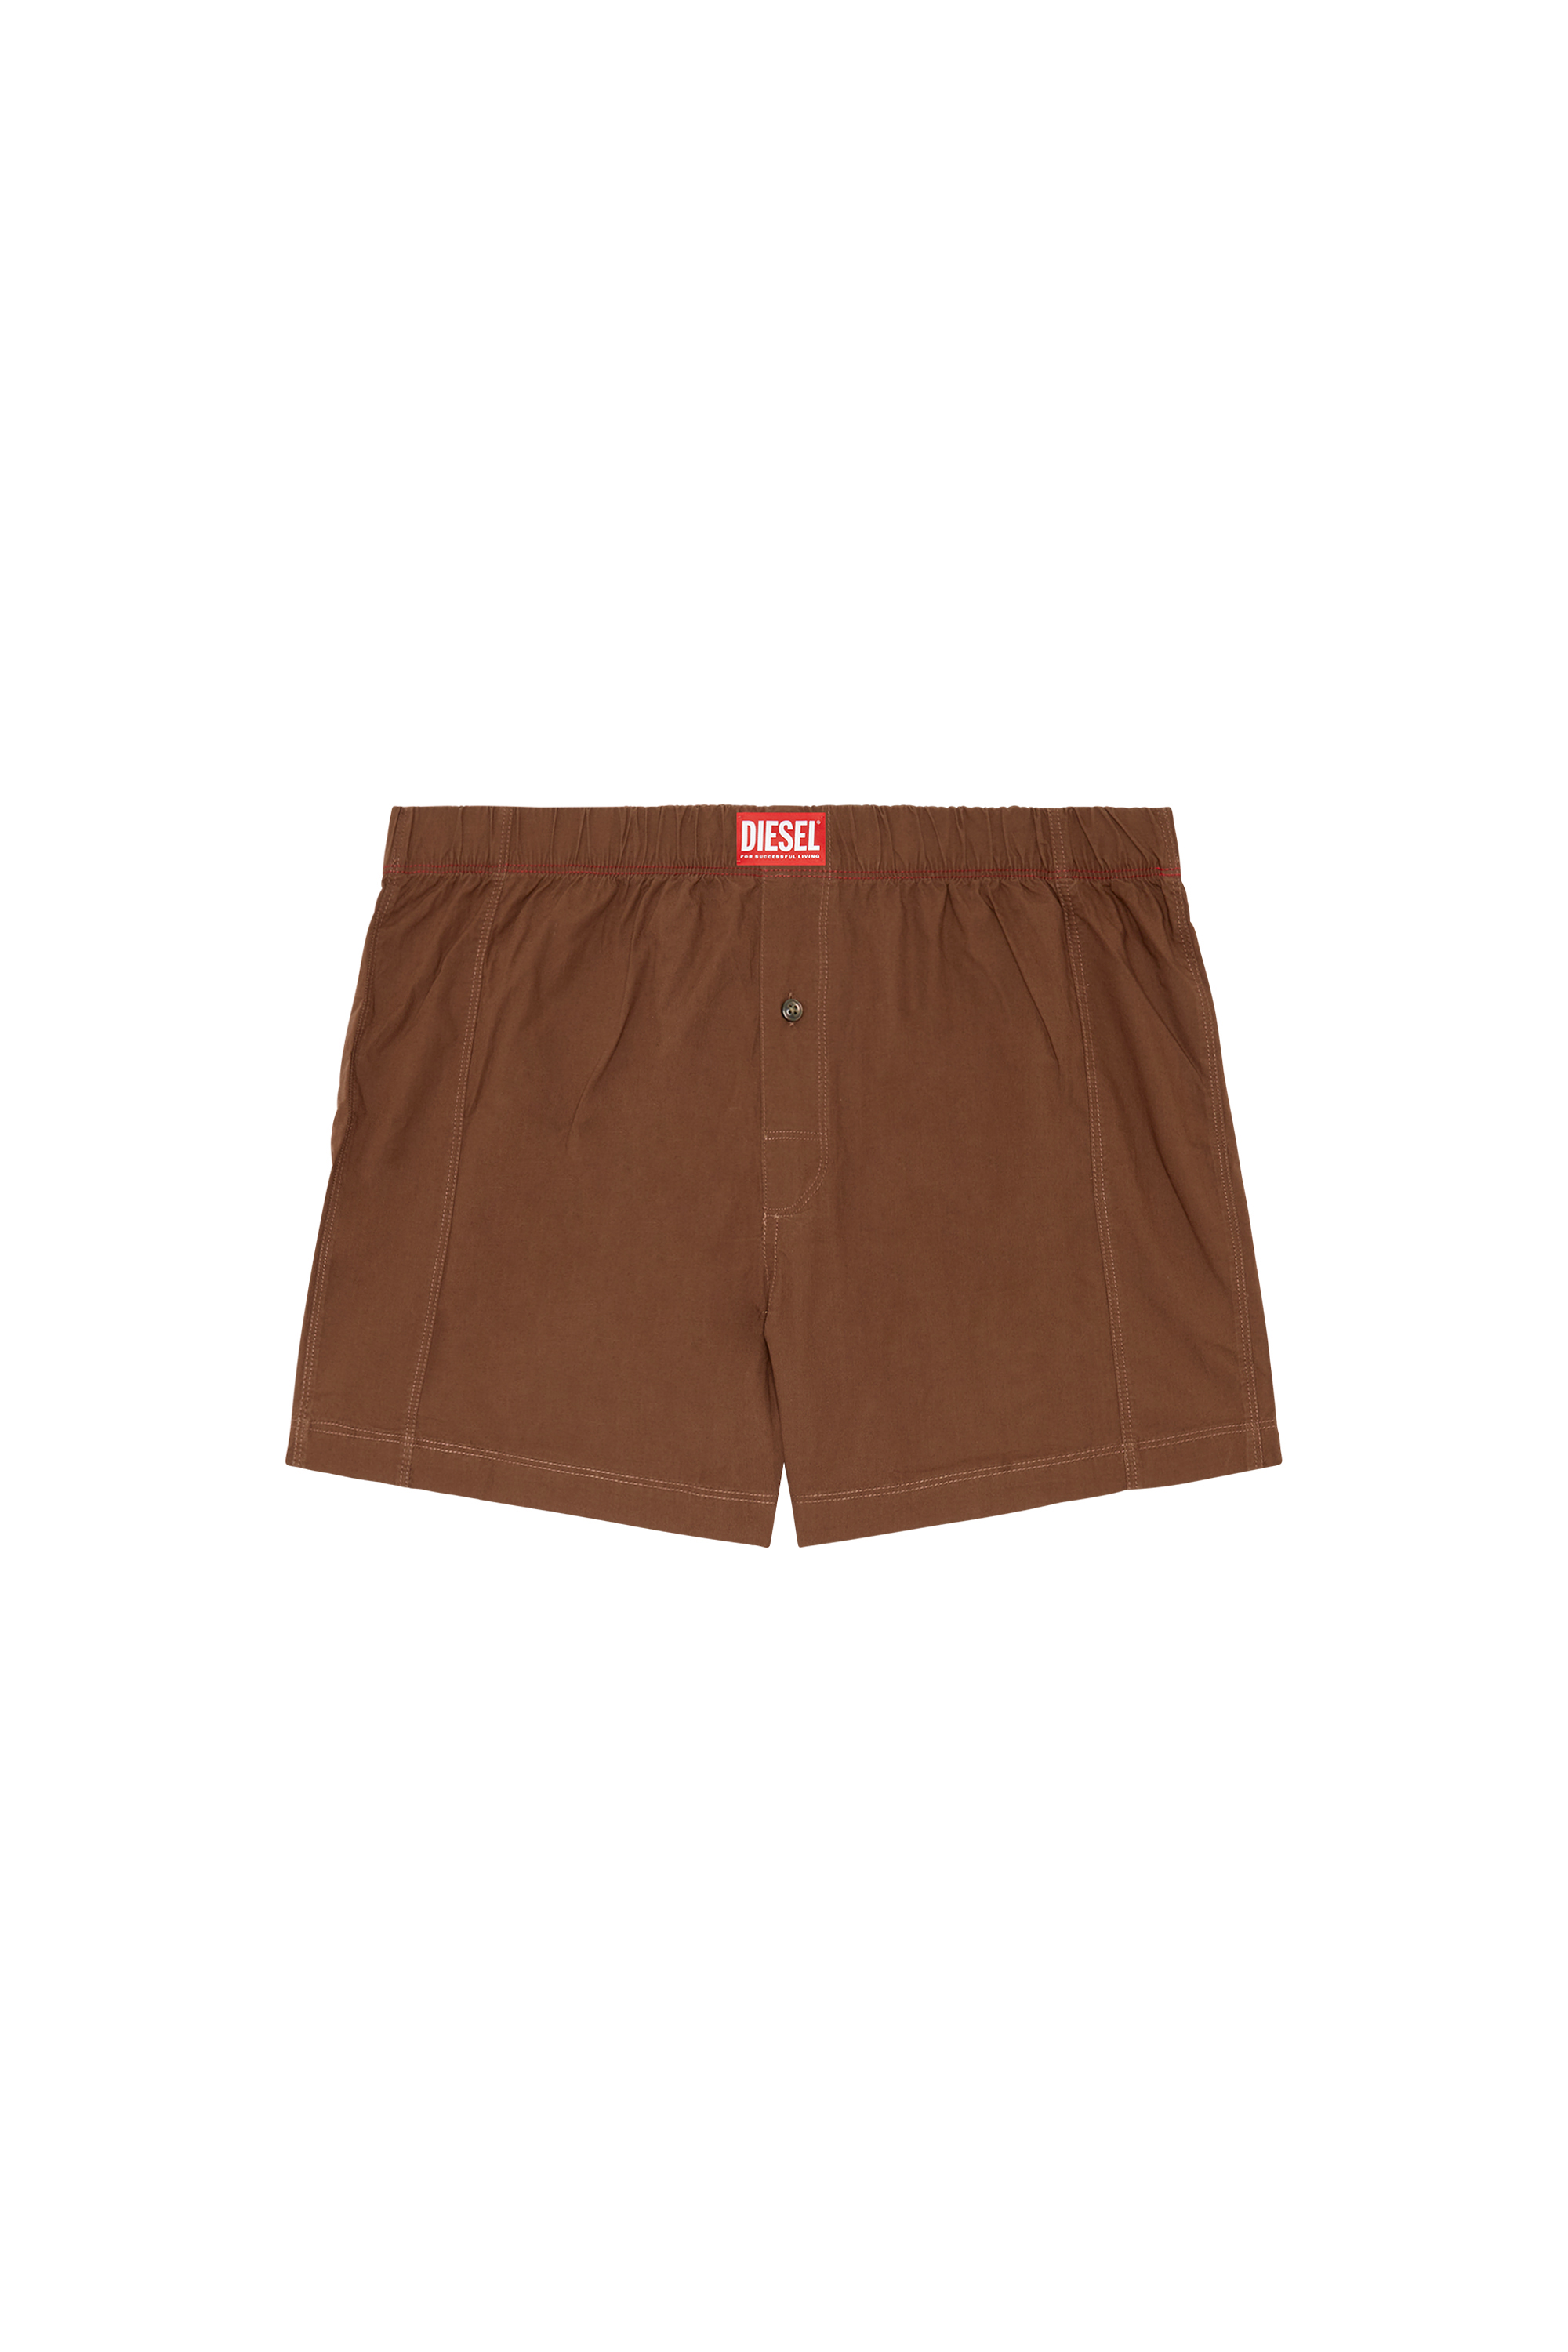 Diesel - UUBX-STARK, Unisex Nude cotton boxers in Brown - Image 7